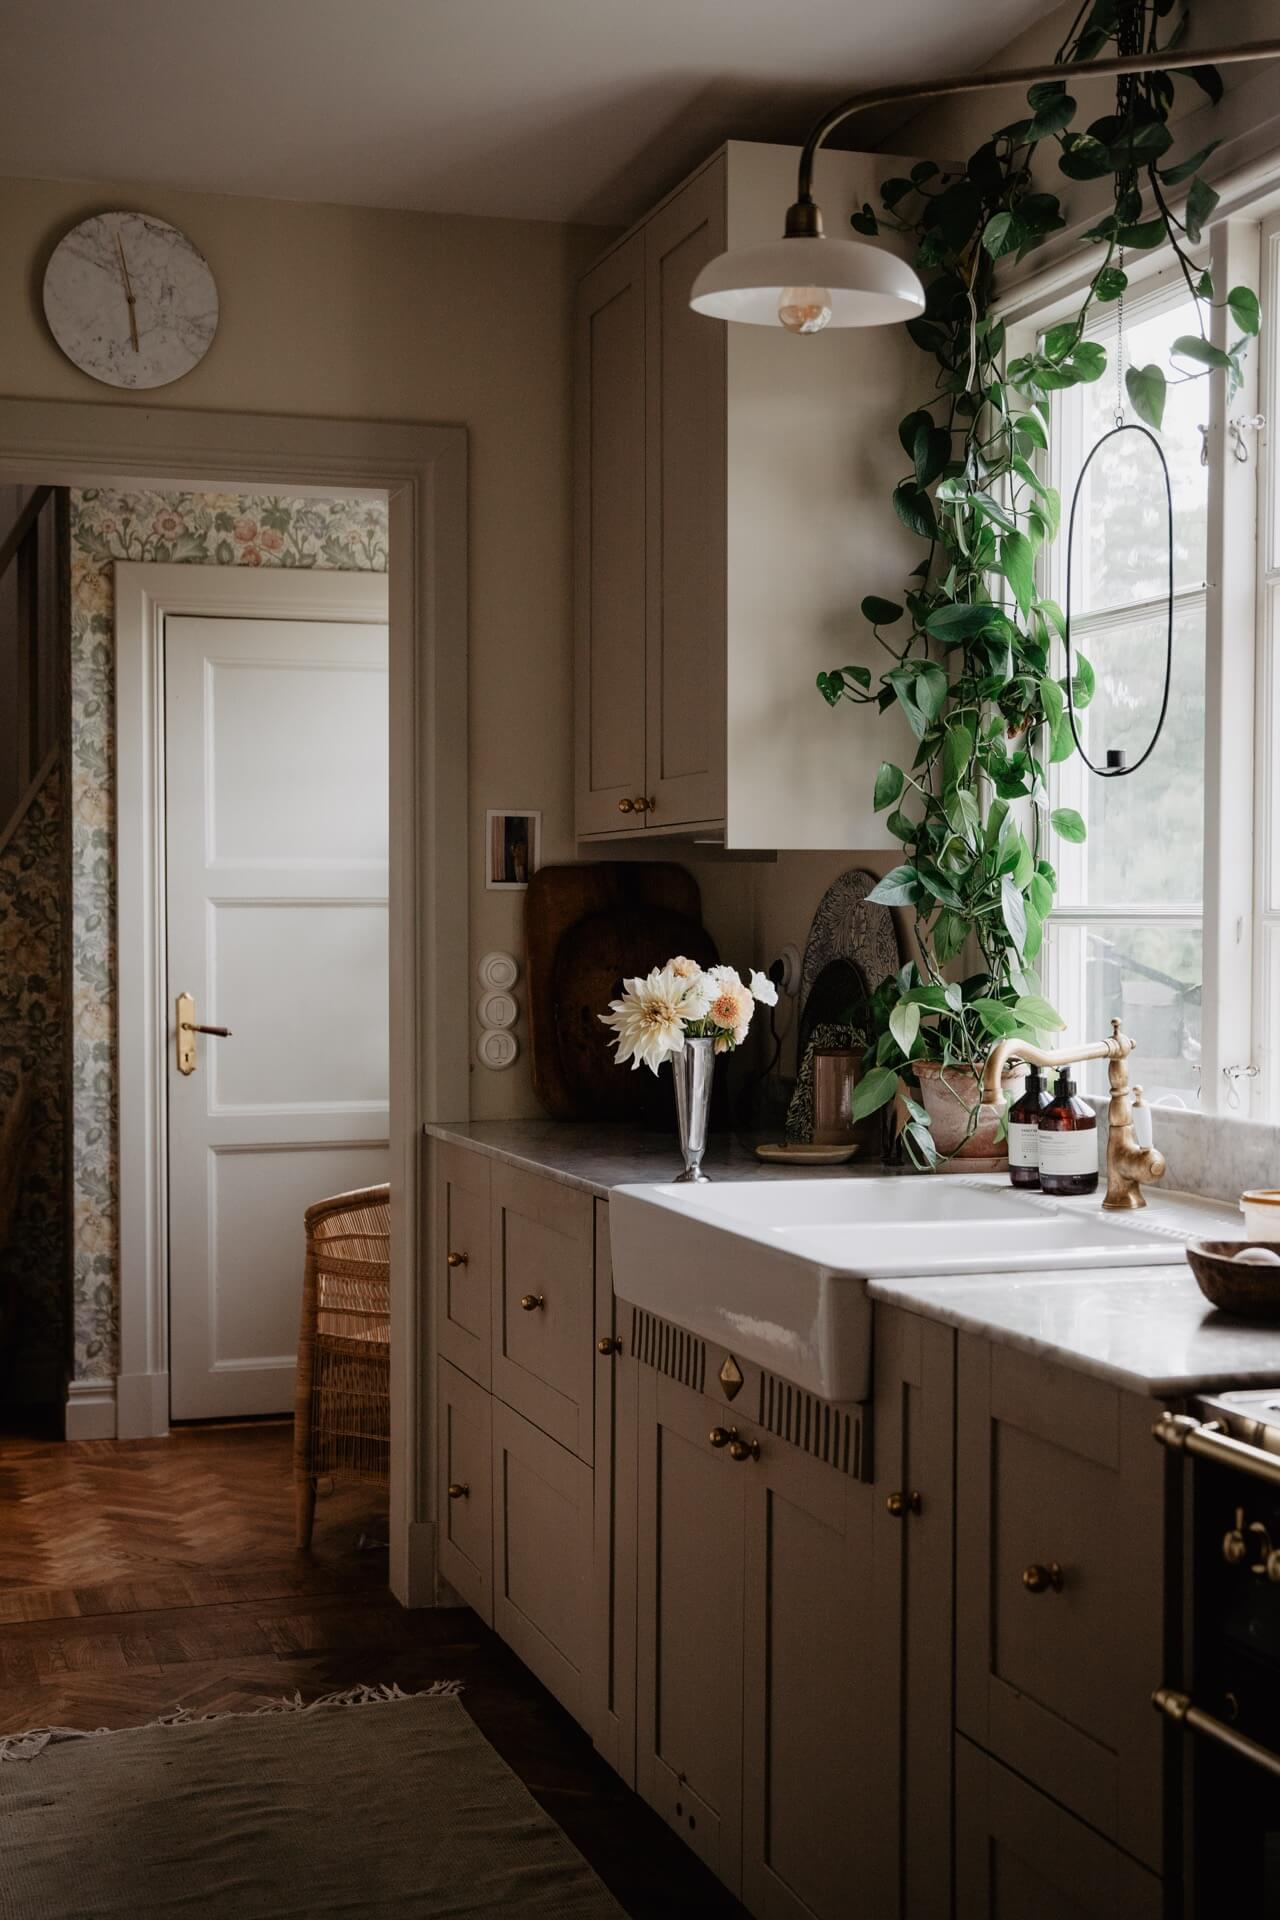 Emelie Sundberg home tour - interior of Swedish home - kitchen